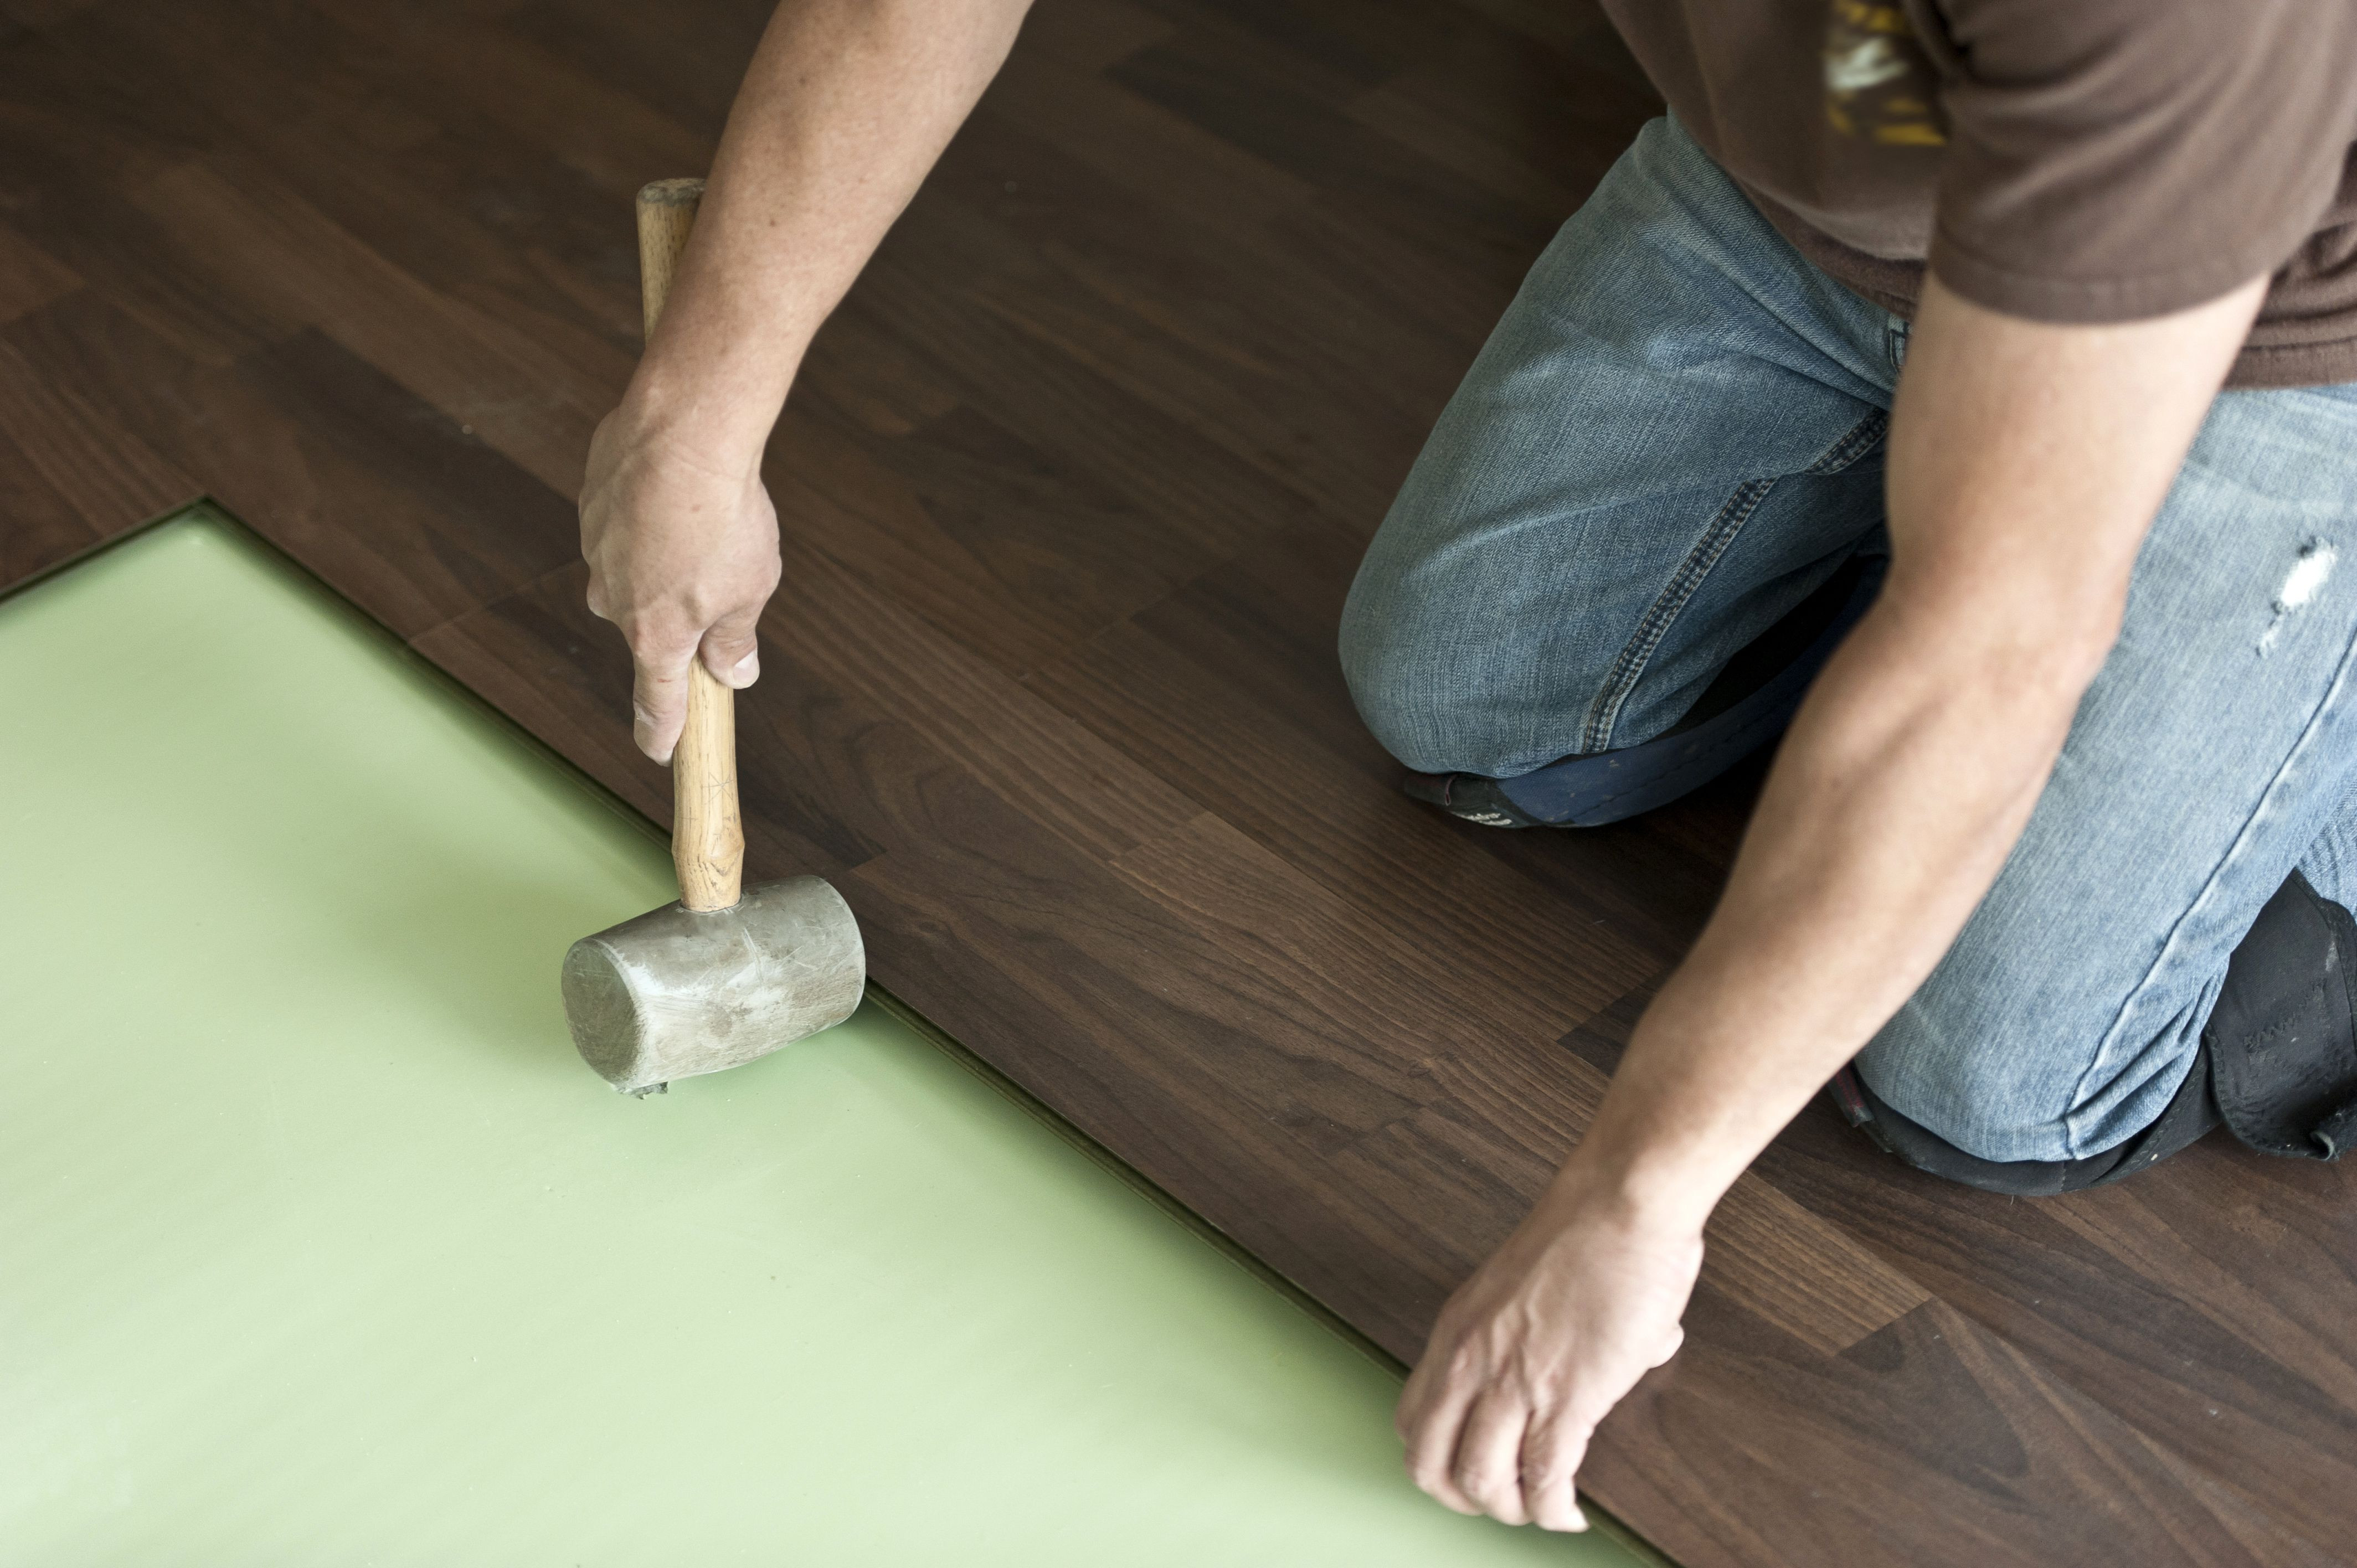 hardwood floor installation tools of can a foam pad be use under solid hardwood flooring in installing hardwood floor 155149312 57e967d45f9b586c35ade84a